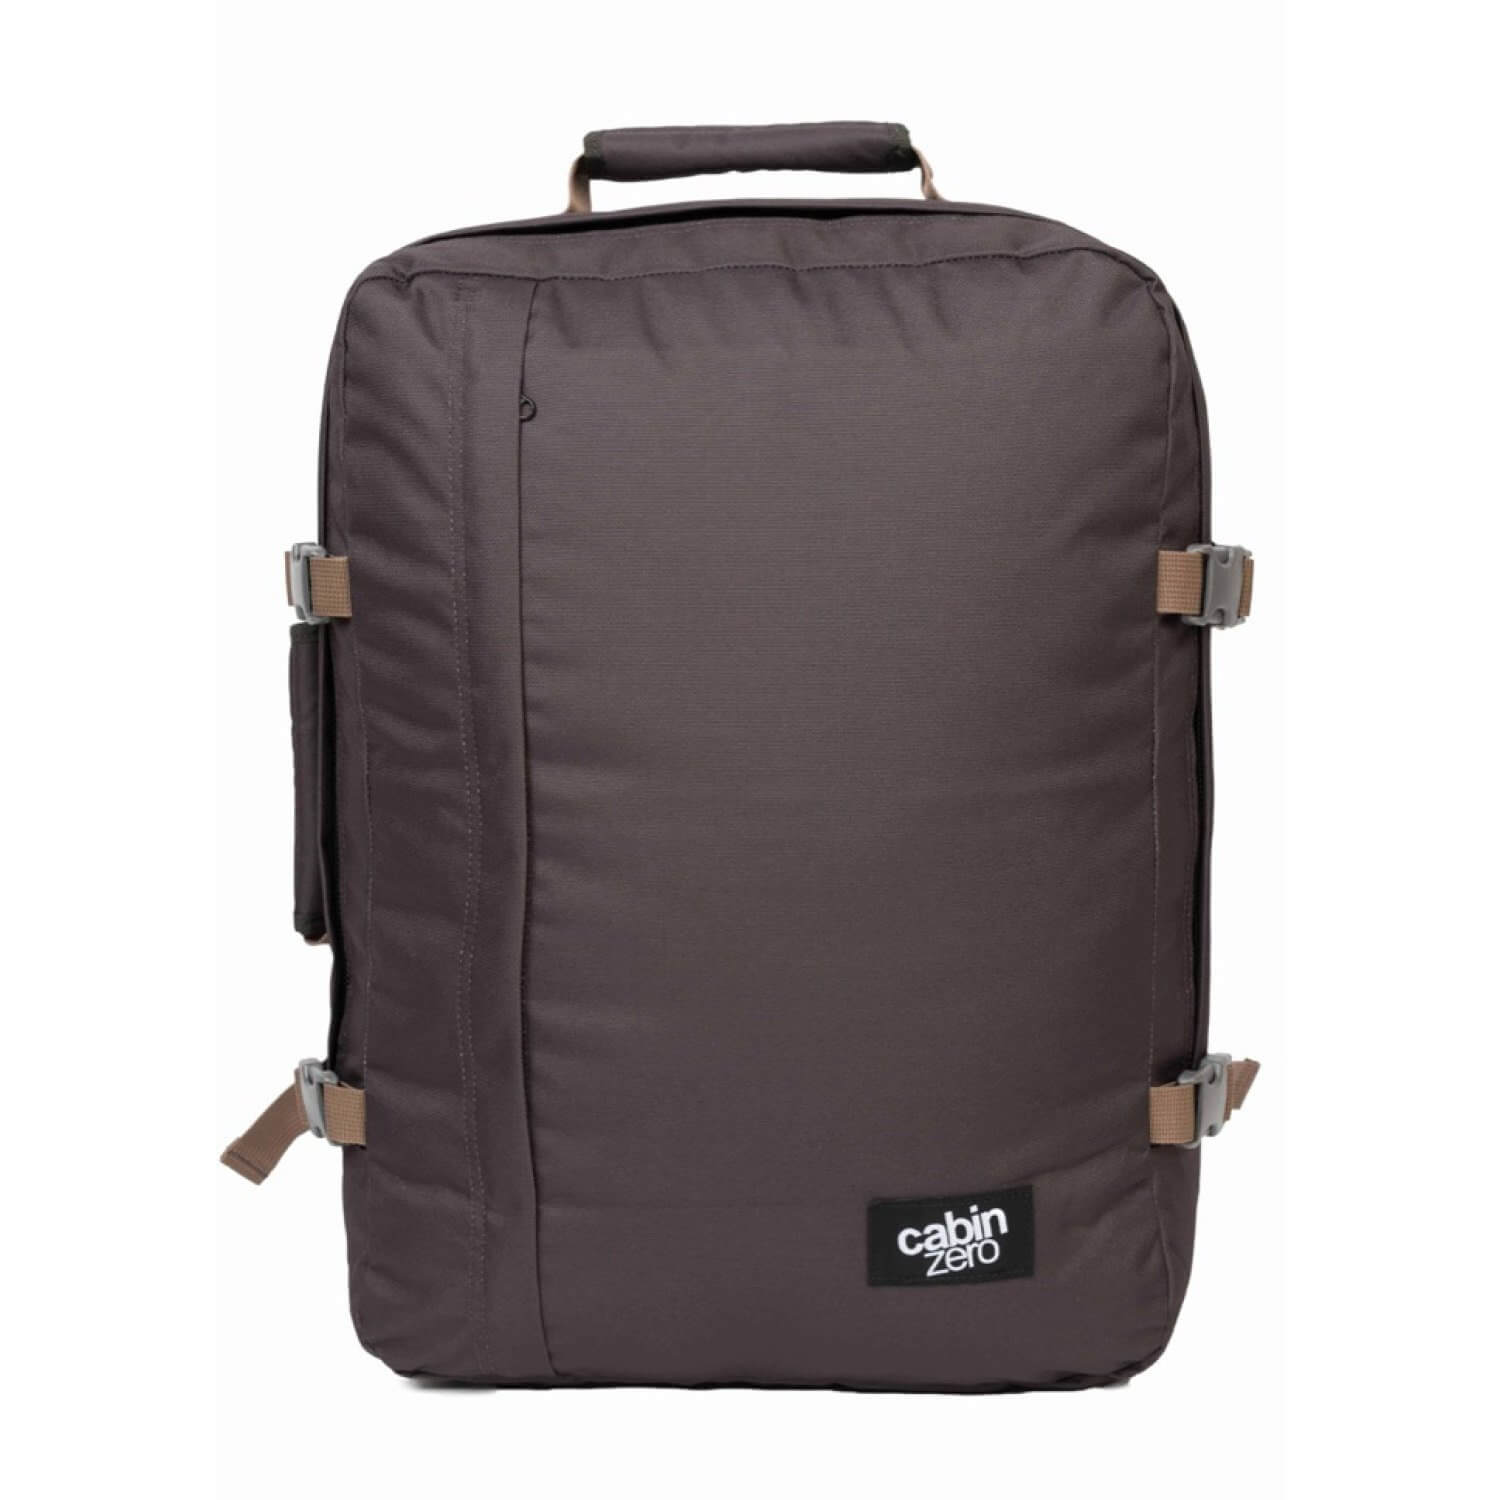 Cabin Zero Backpack 44l Black Sand | Traveller Store